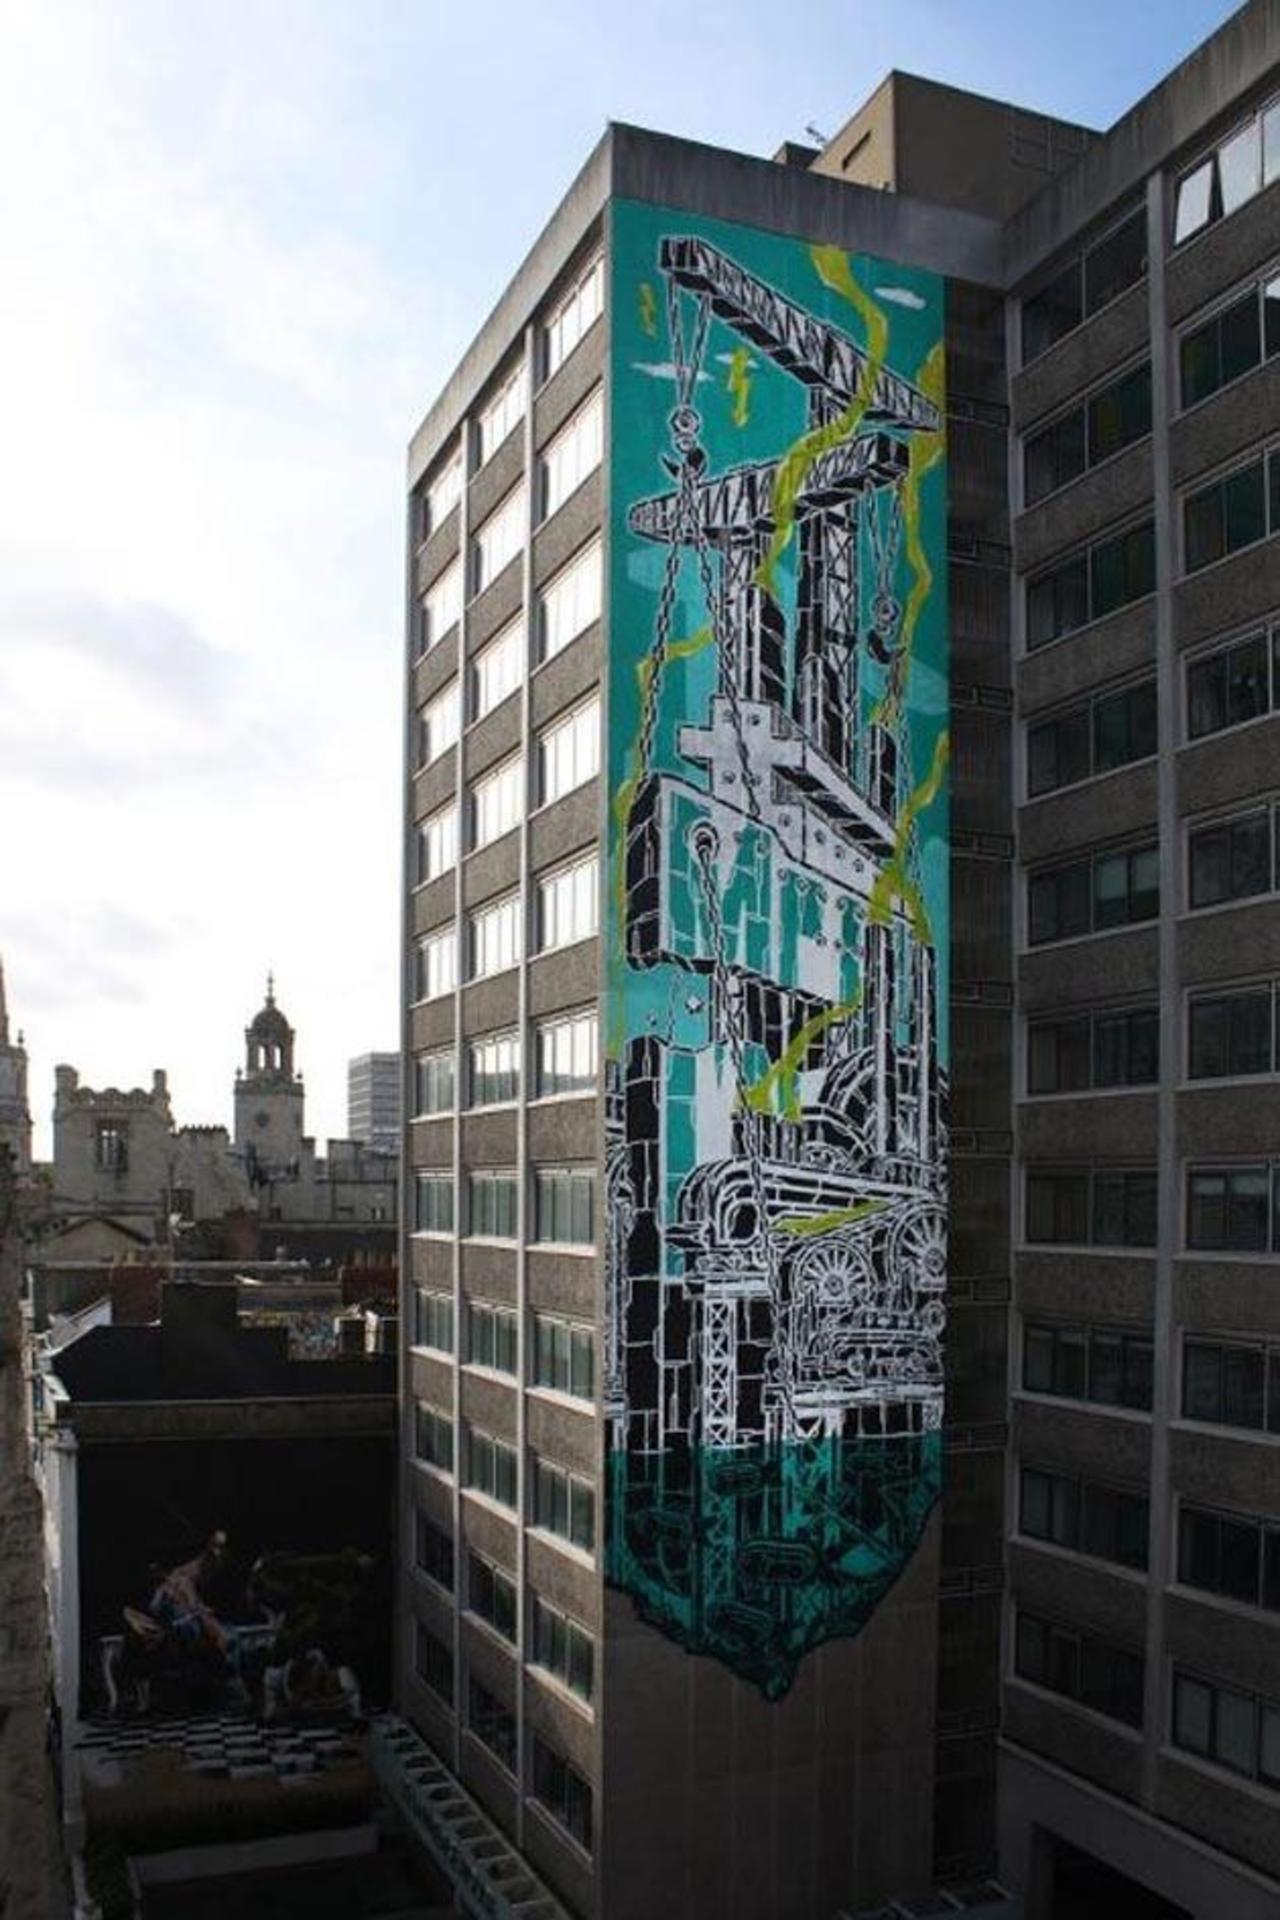 M-city

#Graffiti #StreetArt #Mural #painting #painting #Urban #Art http://t.co/13NEzuWFSP